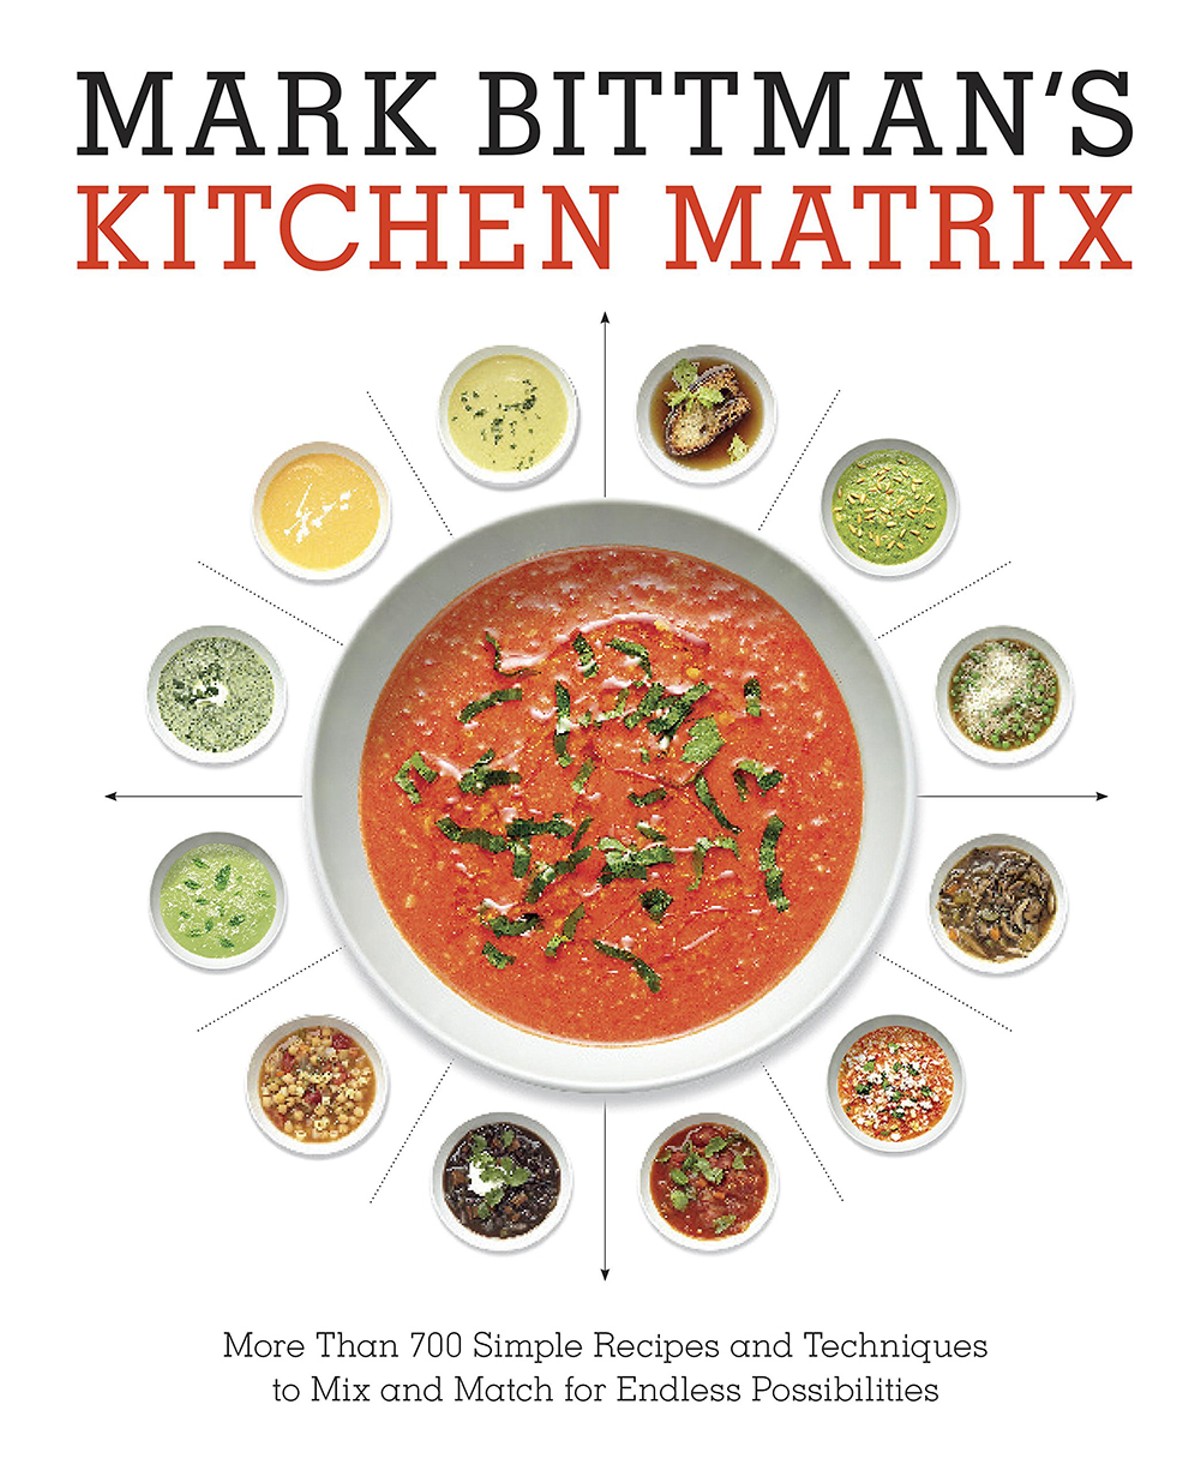 1000w_head-kitchen_matrix.jpg